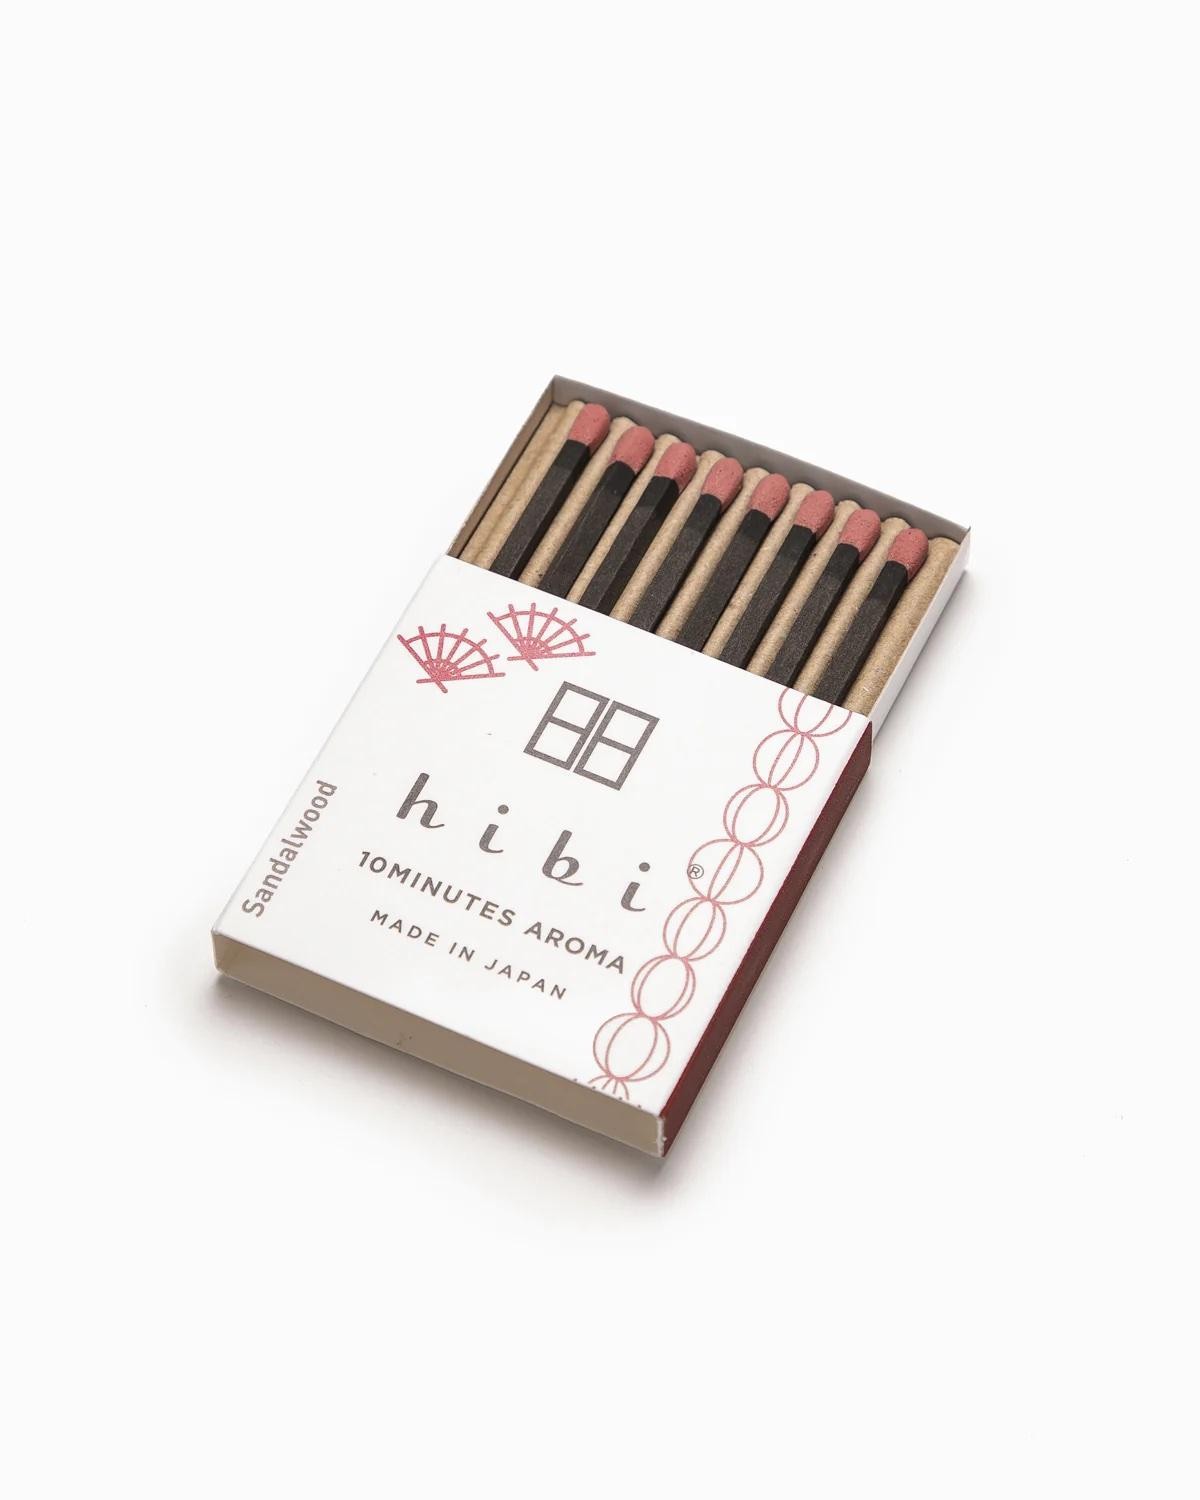 HIB Hibi Sandalwood incense matches